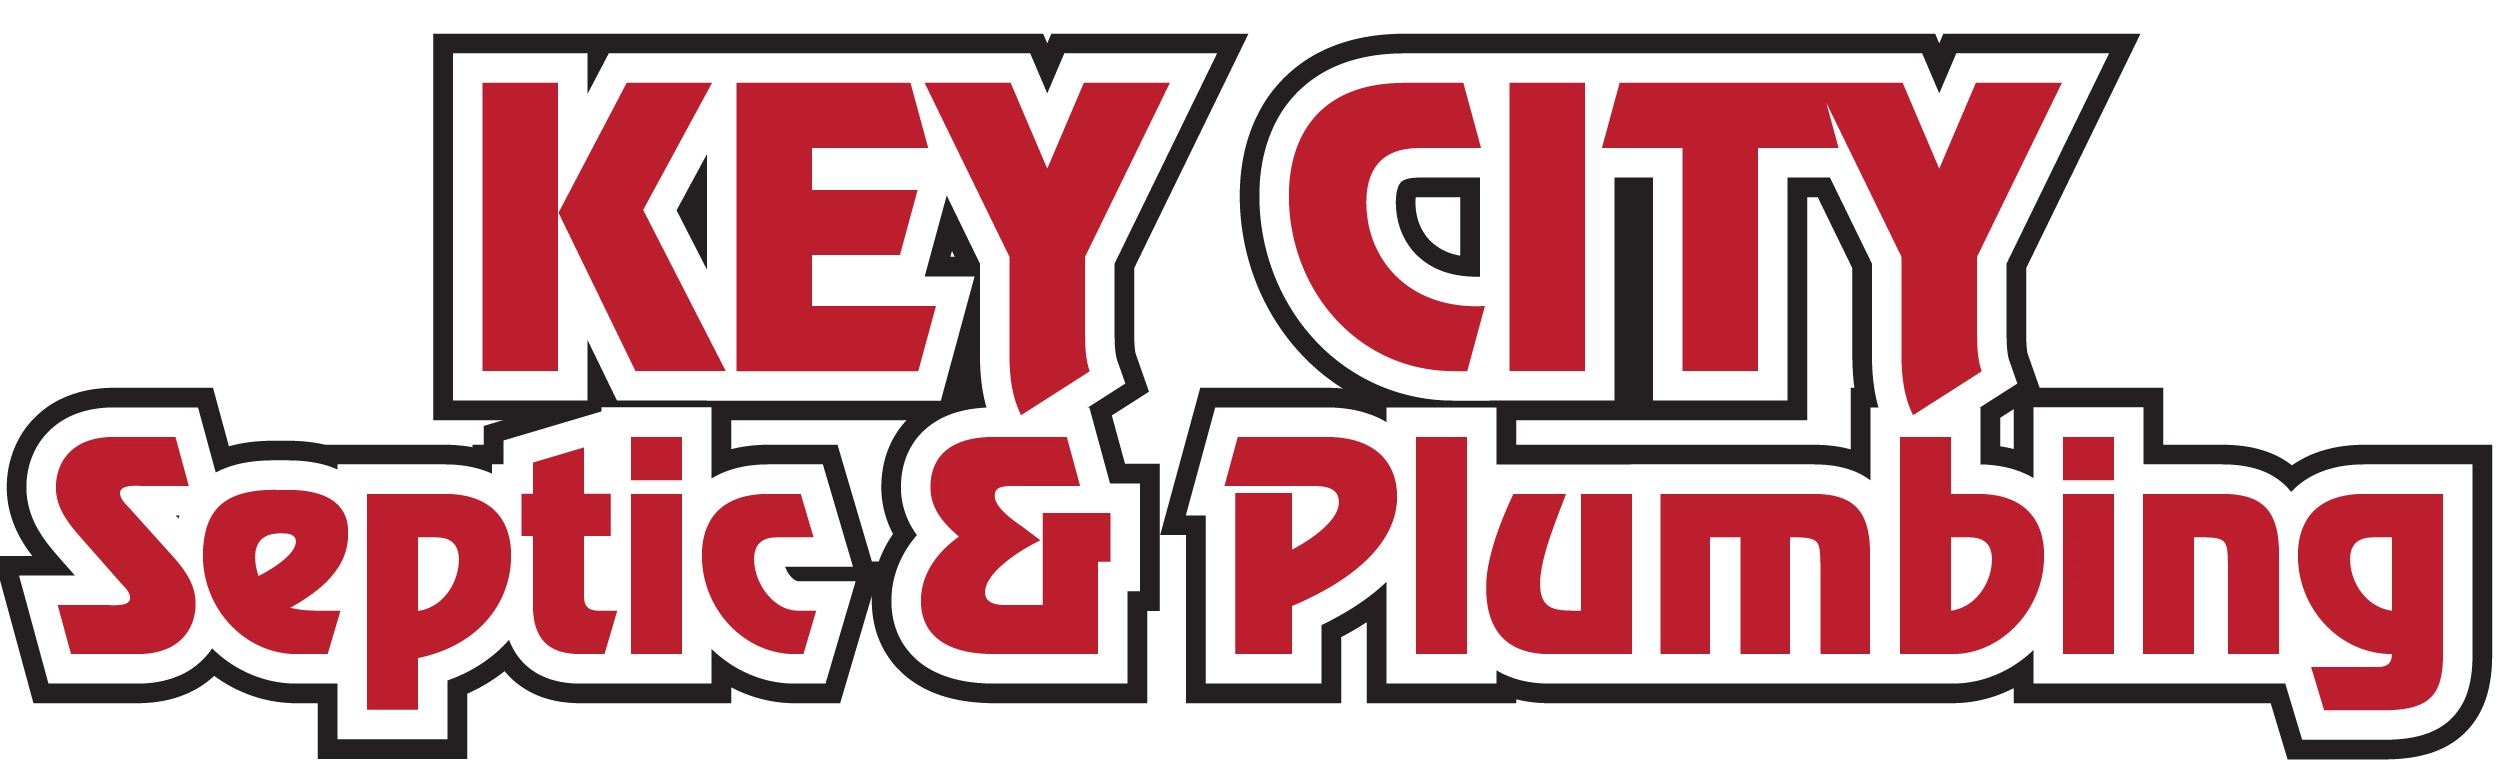 Key City Septic & Plumbing Logo